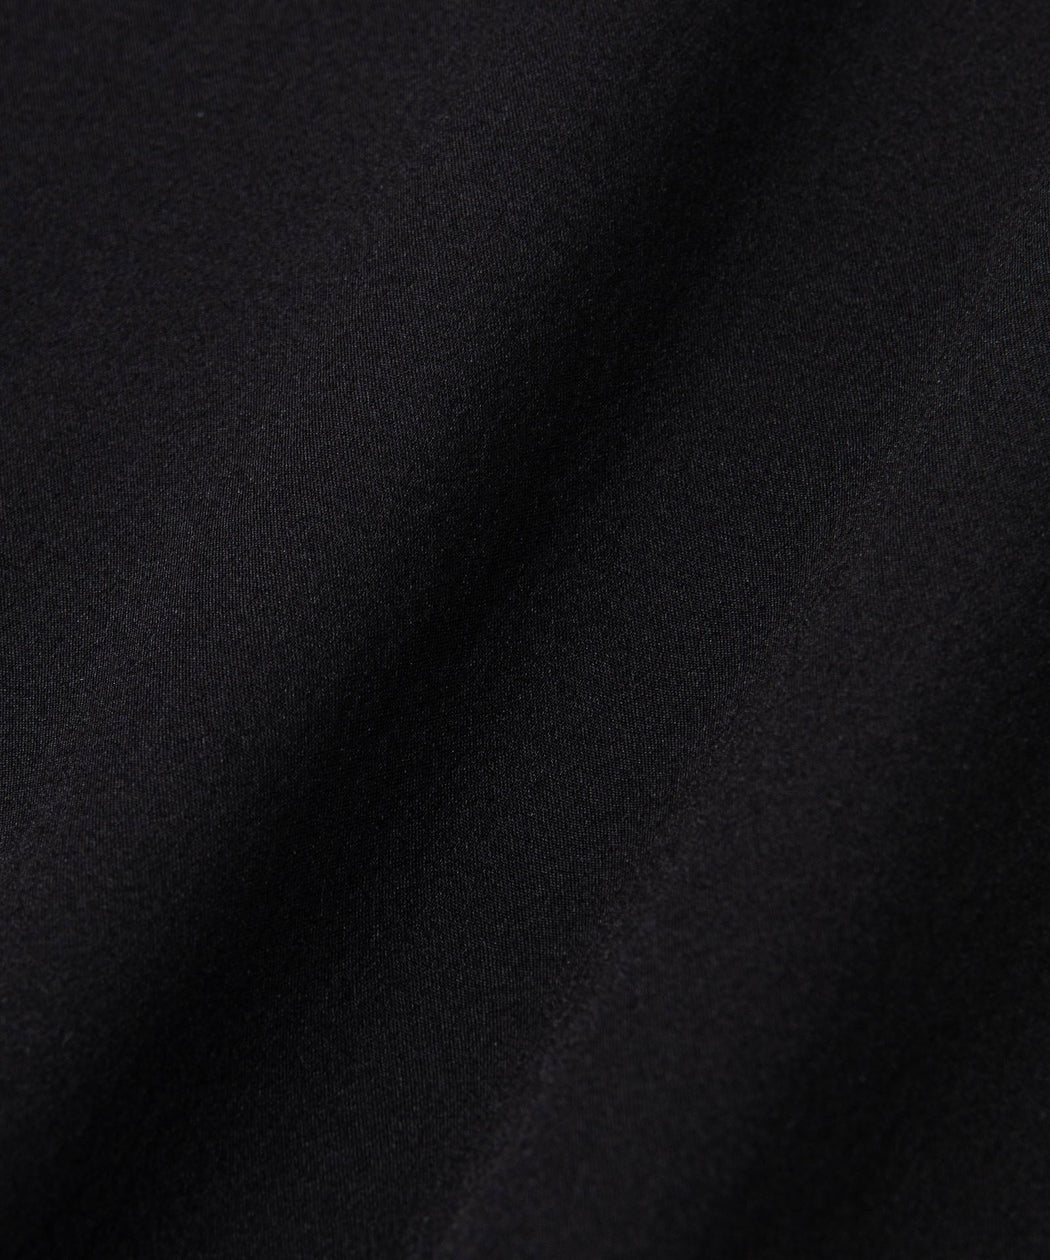 【THOUSAND MILE】French Sleeve shirt＆LONG PANTS　set